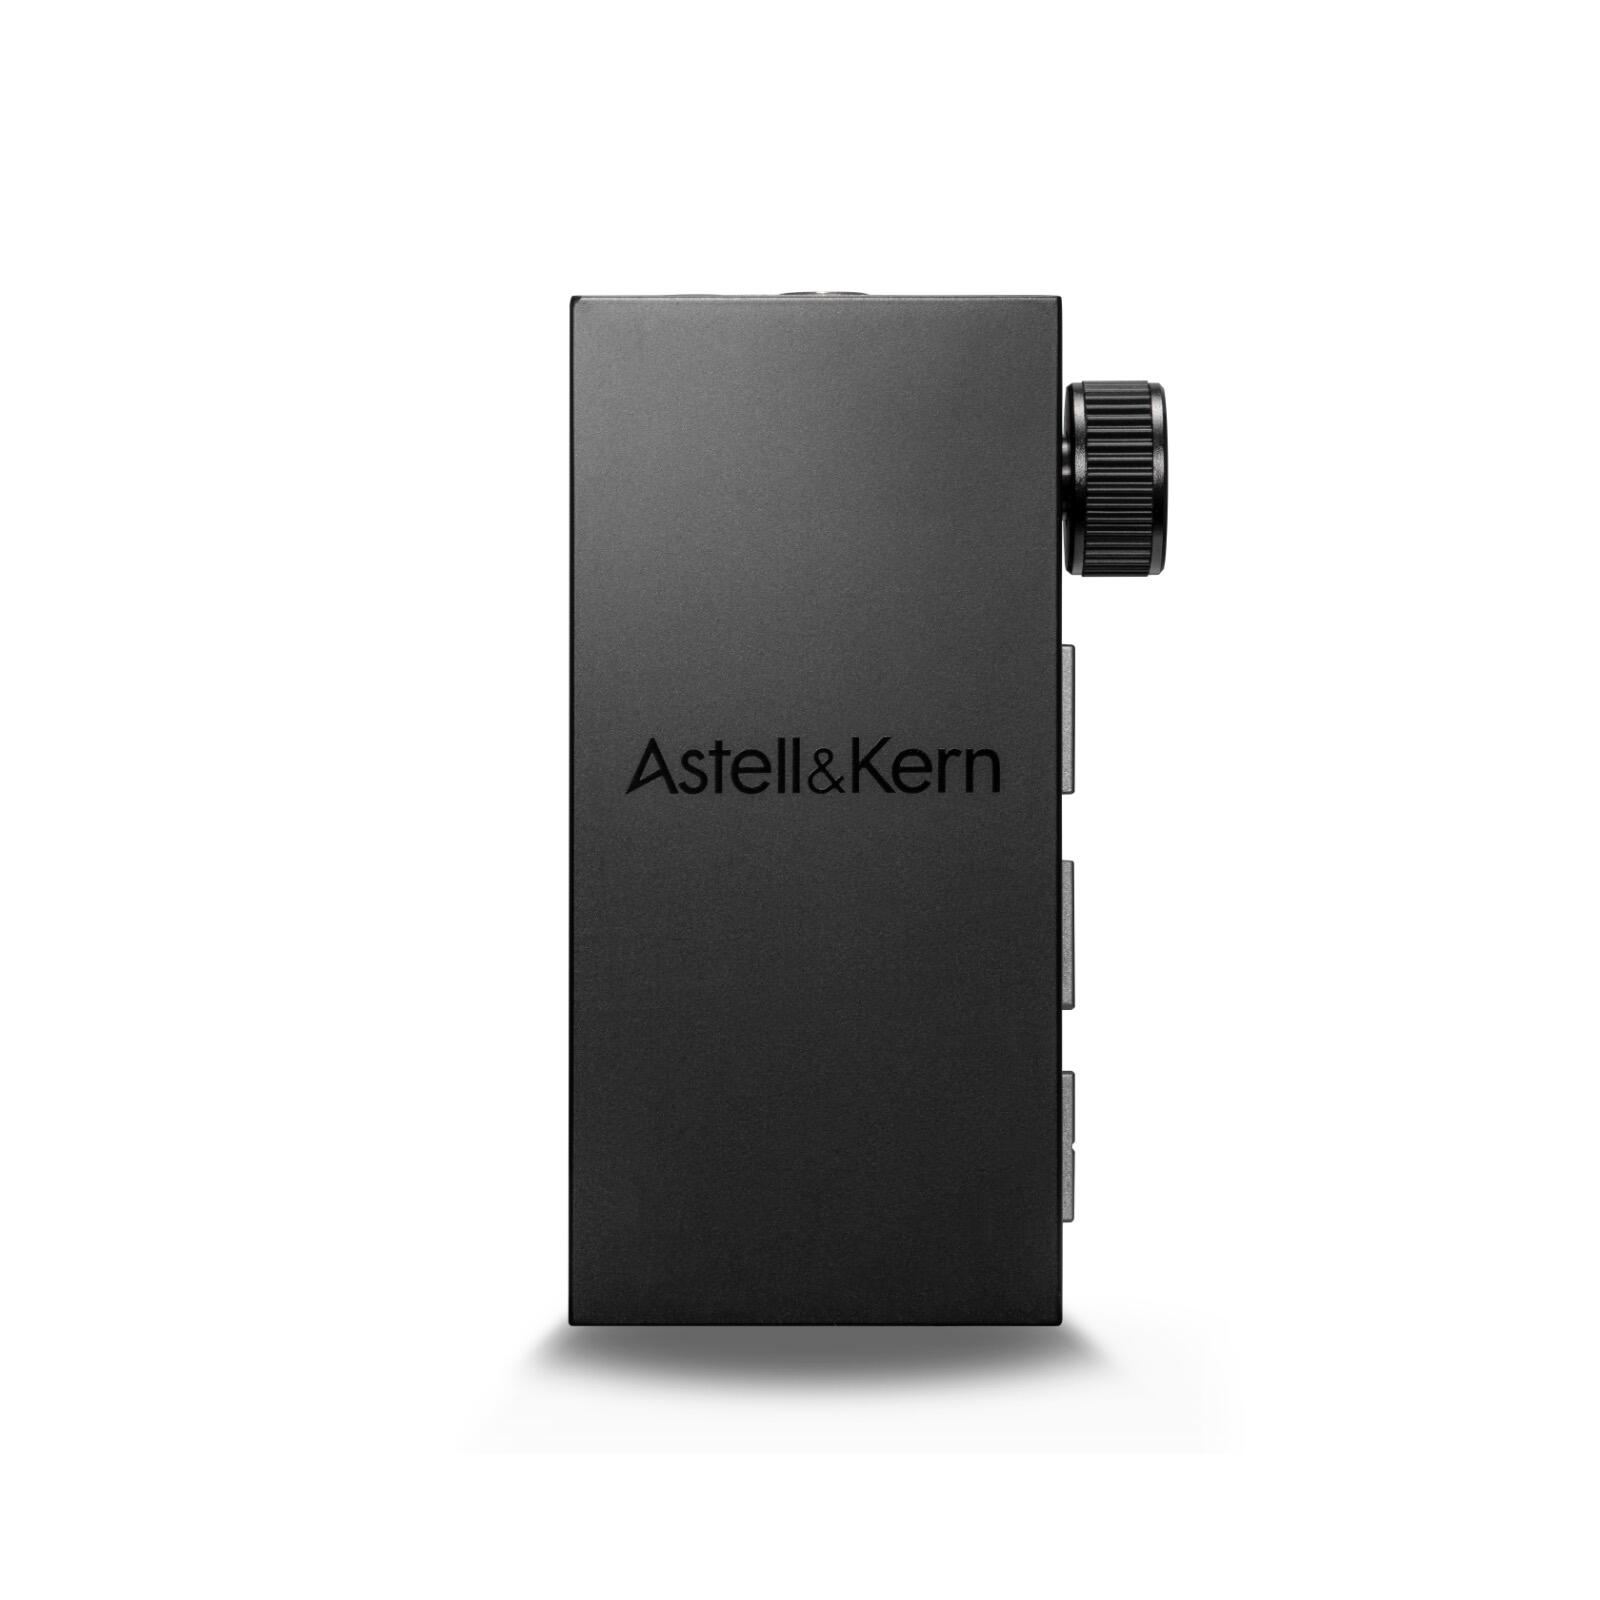 Astell&Kern AK HB1 Wireless & Wired Headphone DAC Amp Bluetooth USB C Lightning